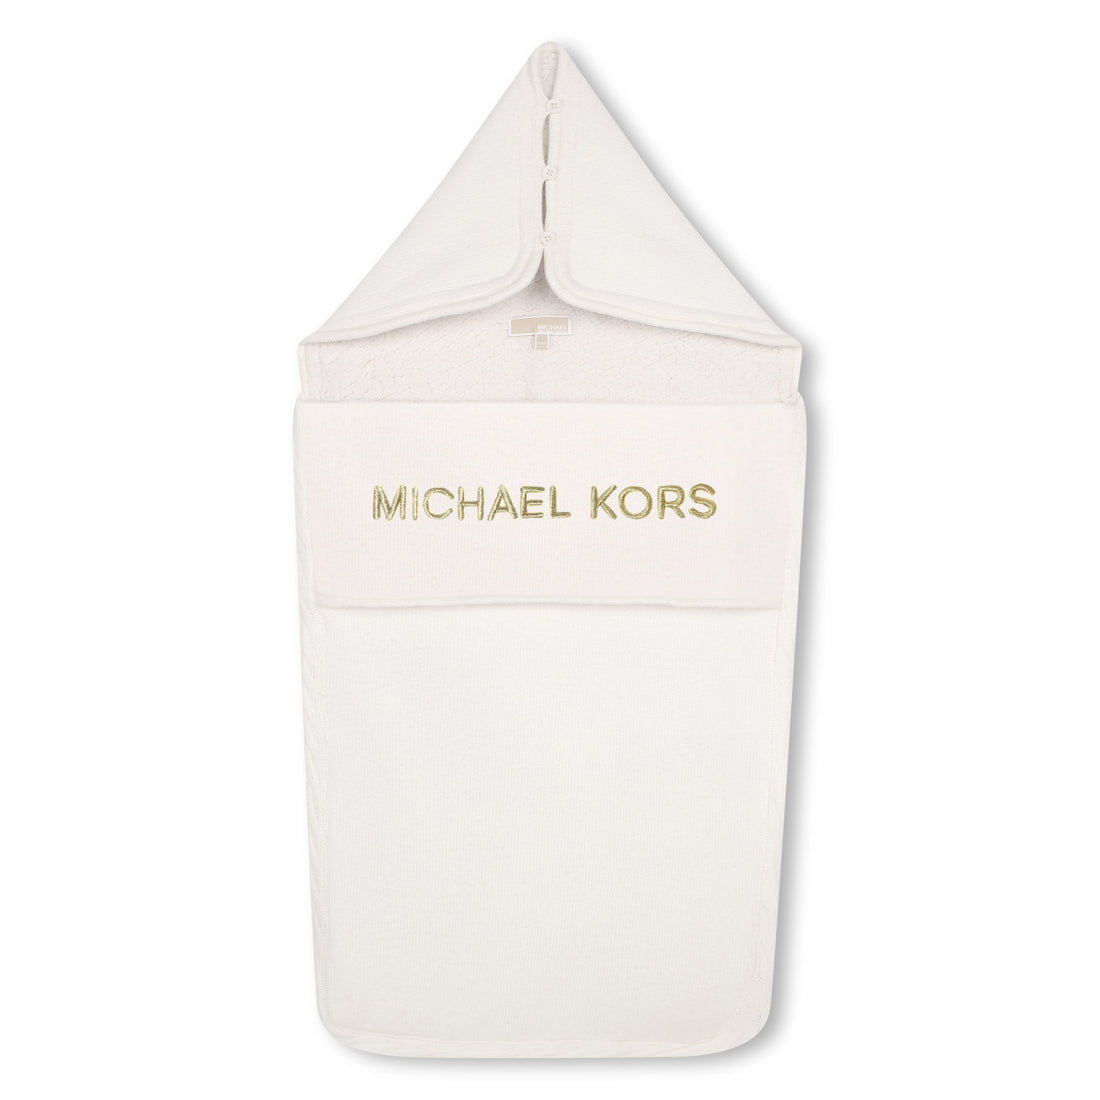 Michael Kors Baby Sleeping Style: R96106